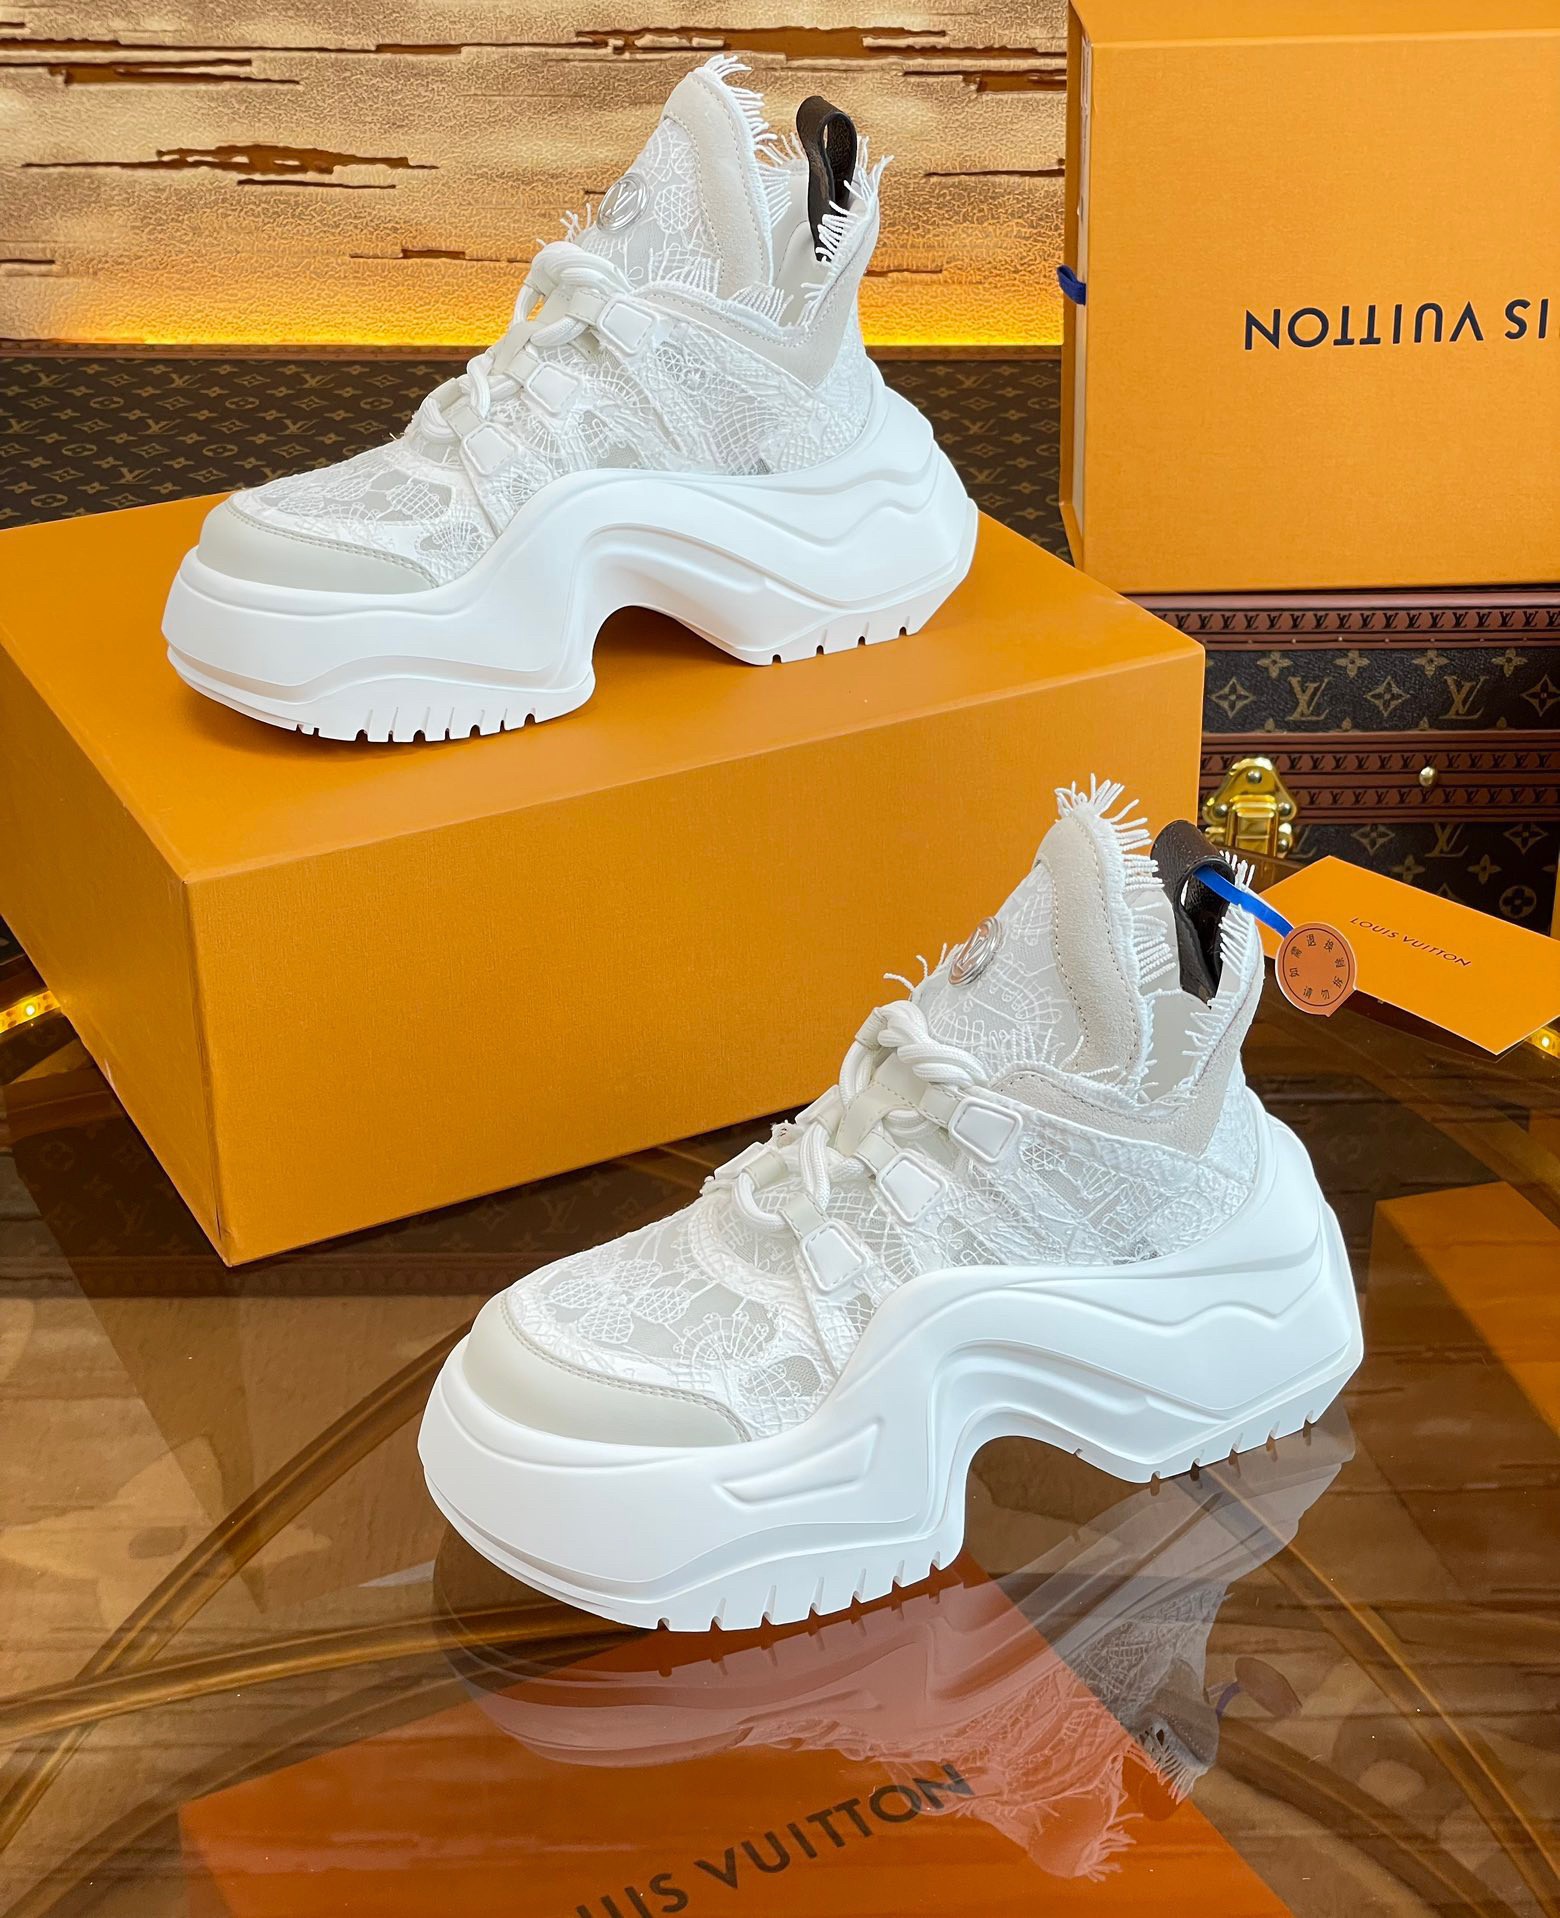 Replica Louis Vuitton LV Archlight 2.0 Platform Sneakers In White Lace